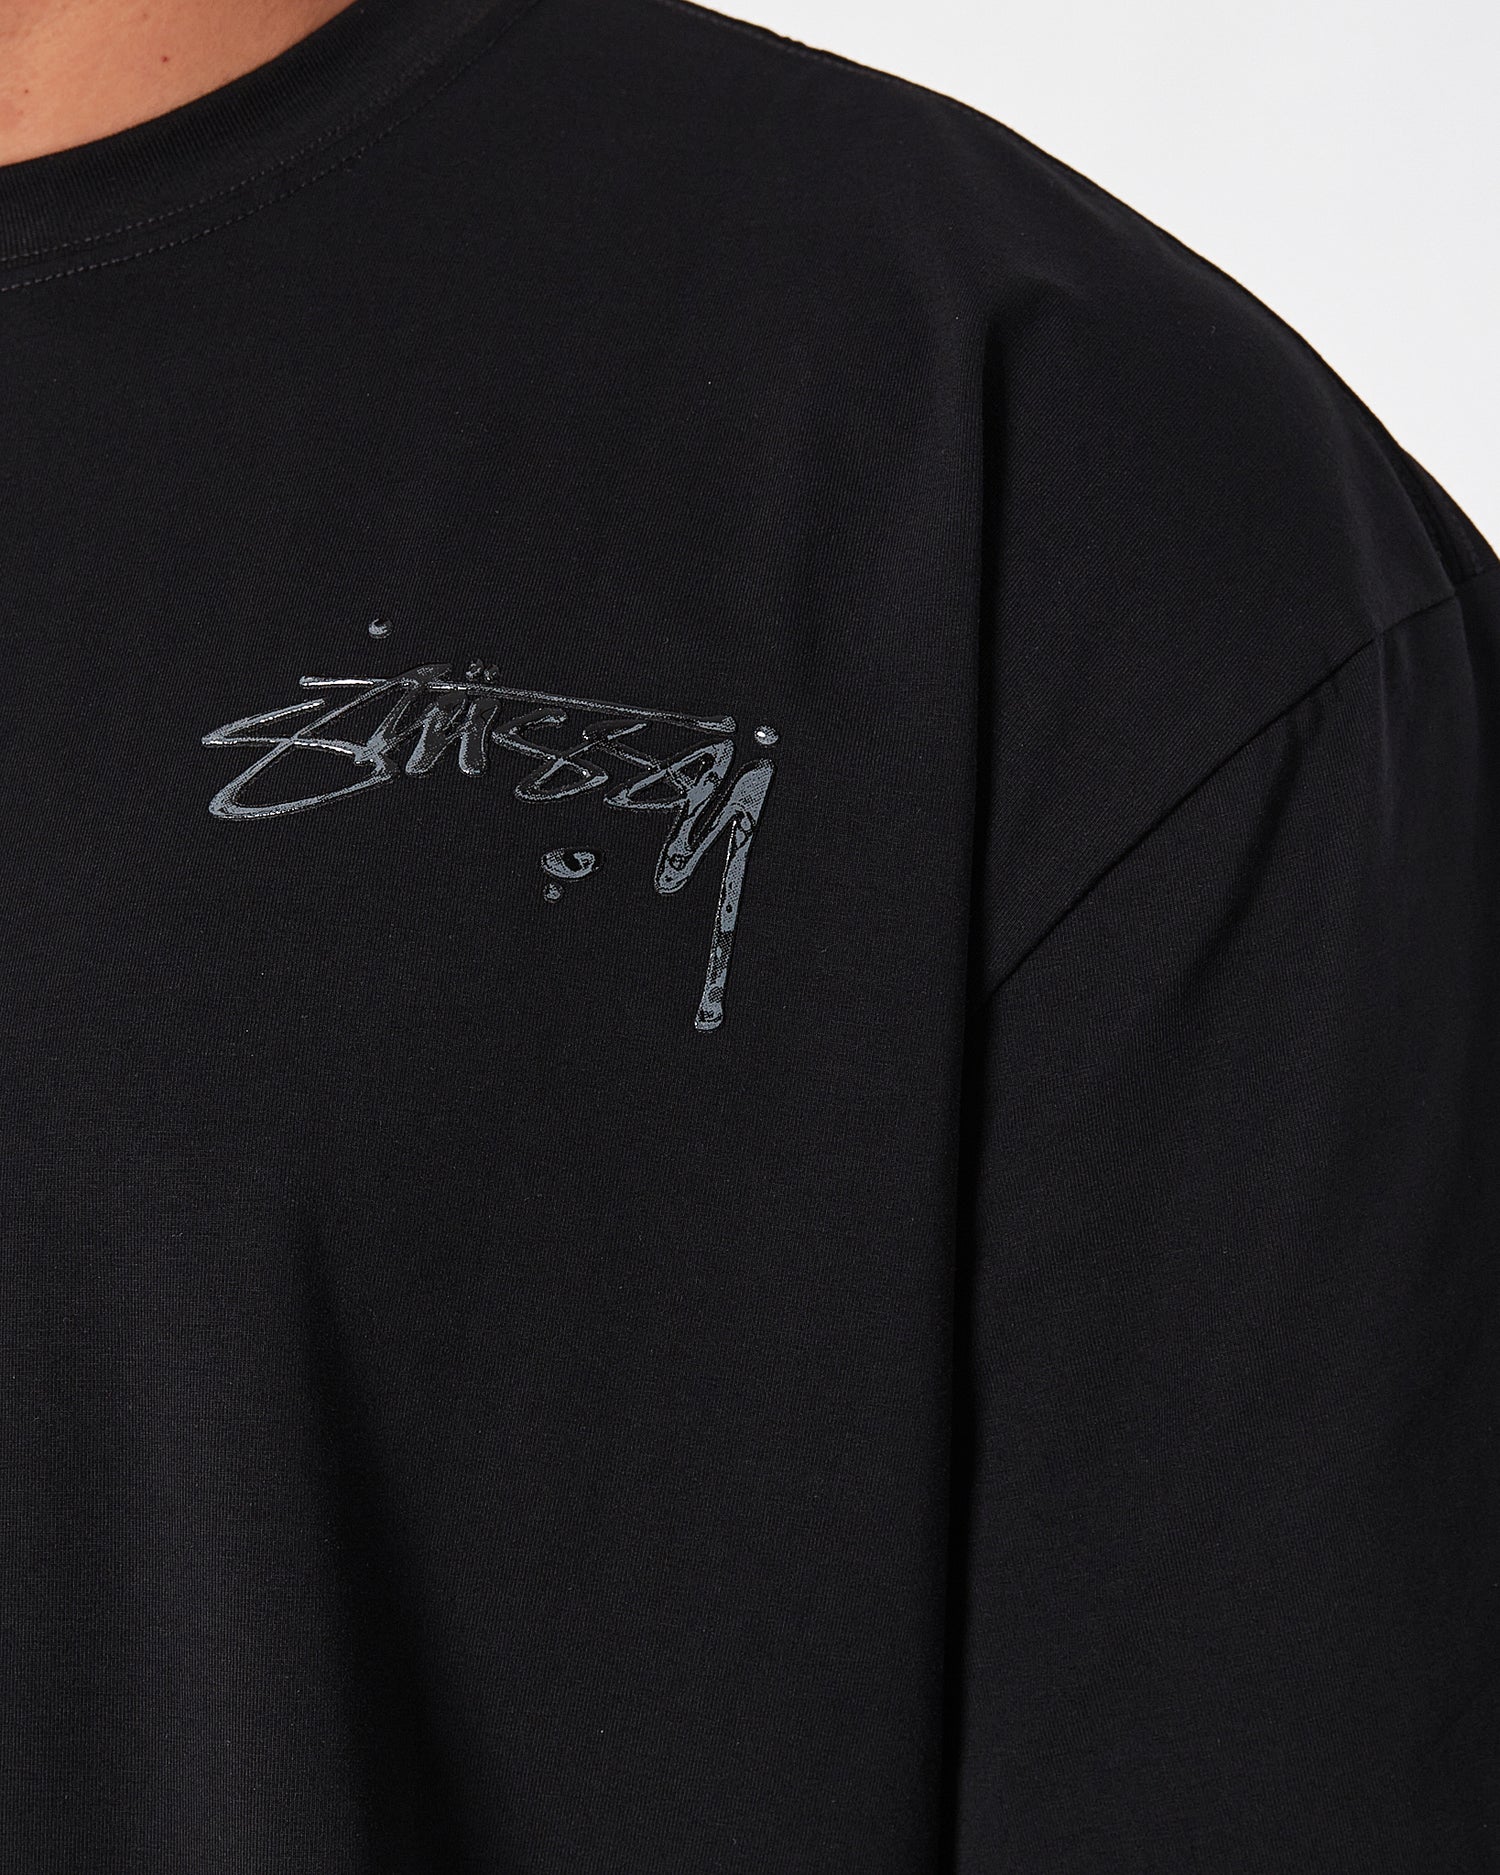 STU Front Back Logo Graffiti Printed Men Black T-Shirt 20.90